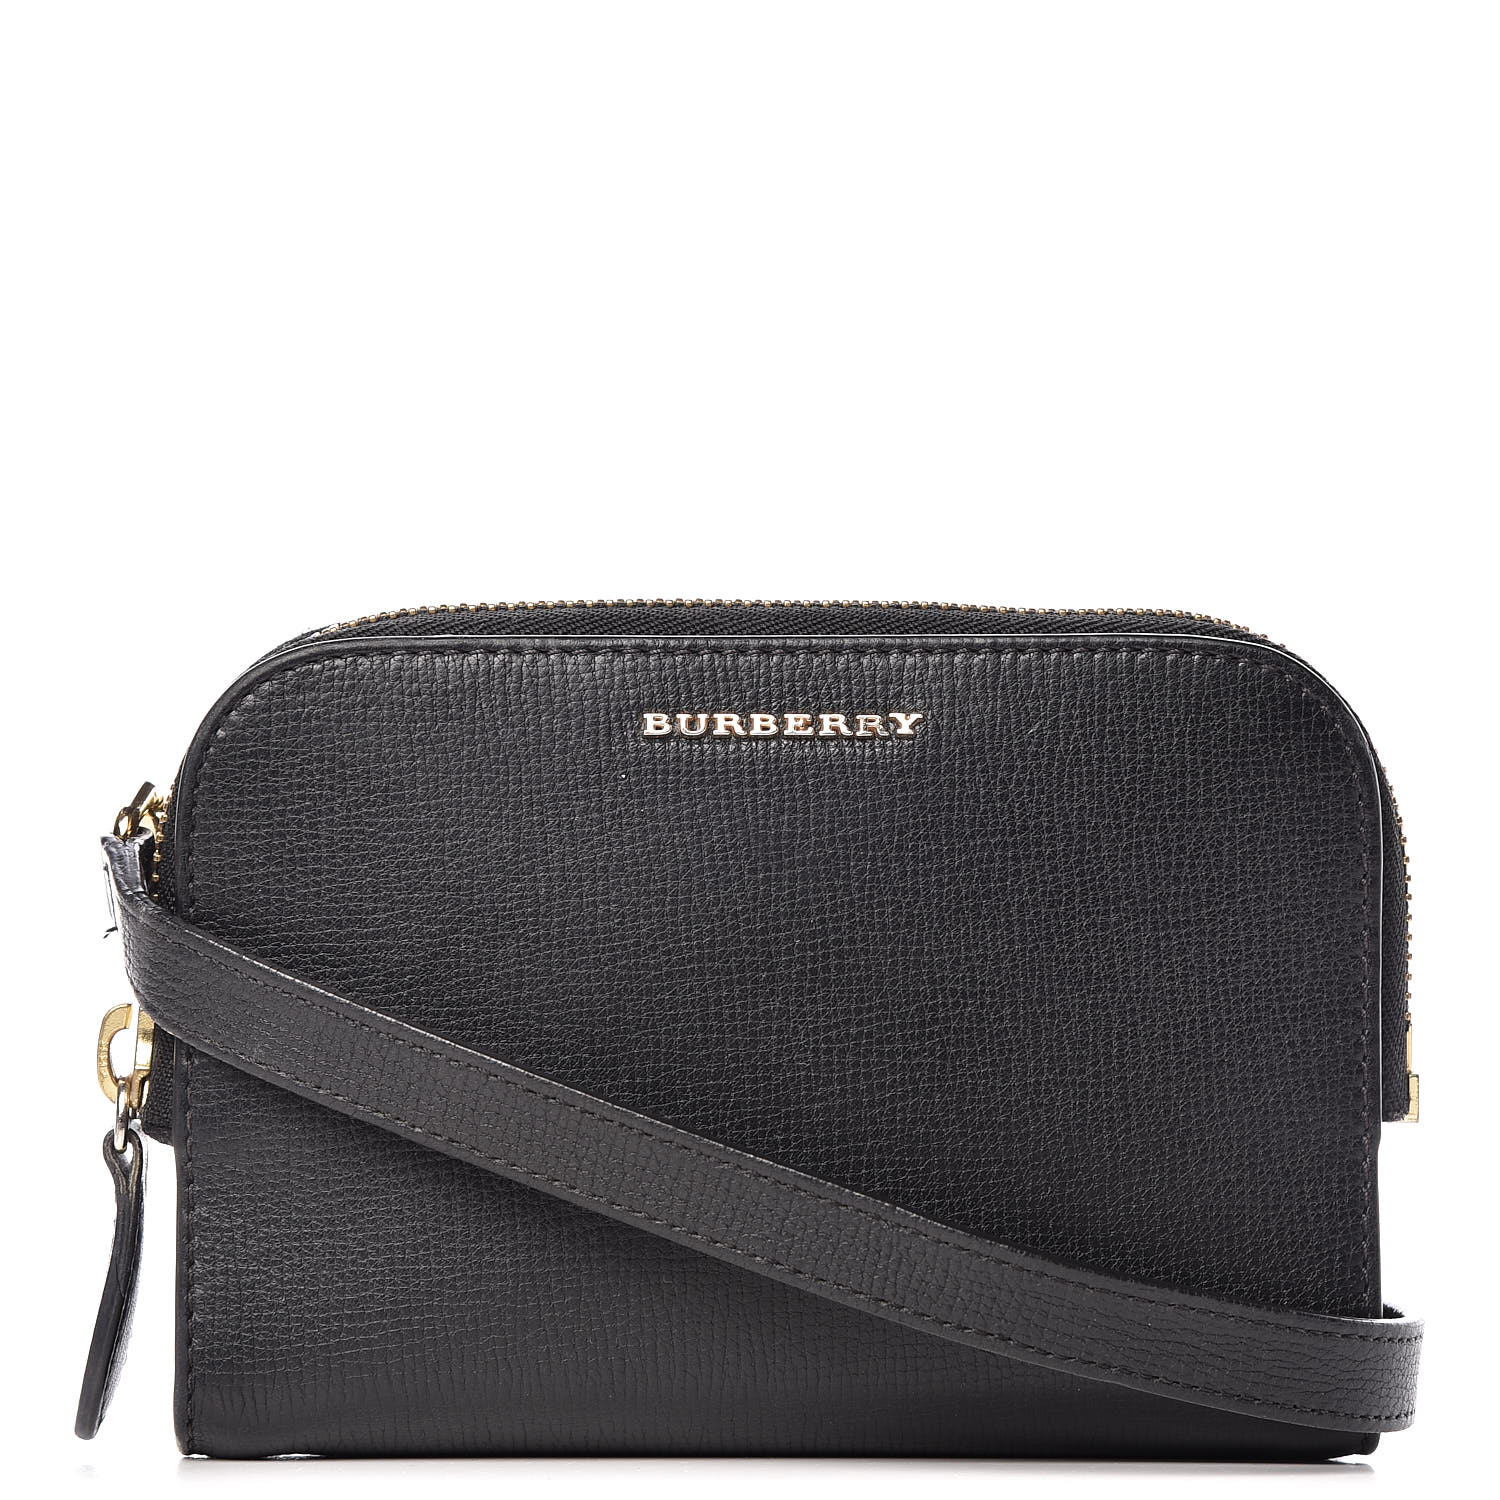 burberry black crossbody bag